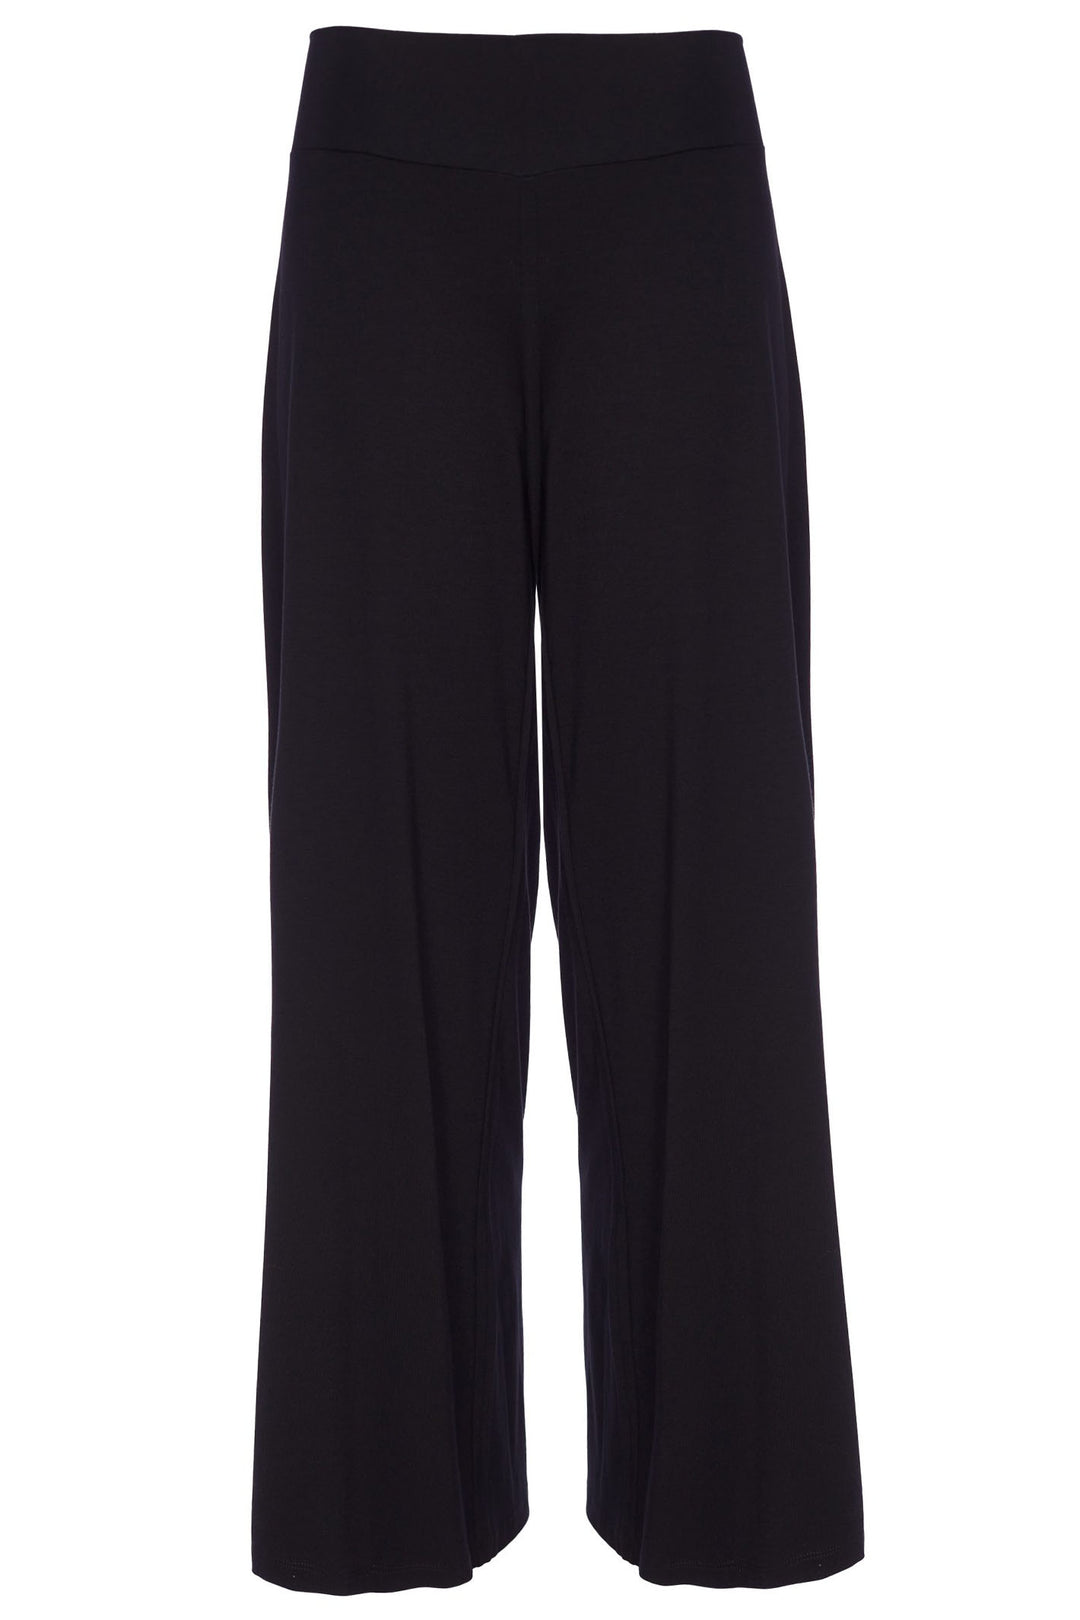 Naya NAS24153 Black Wide Leg Cropped Trousers - Olivia Grace Fashion